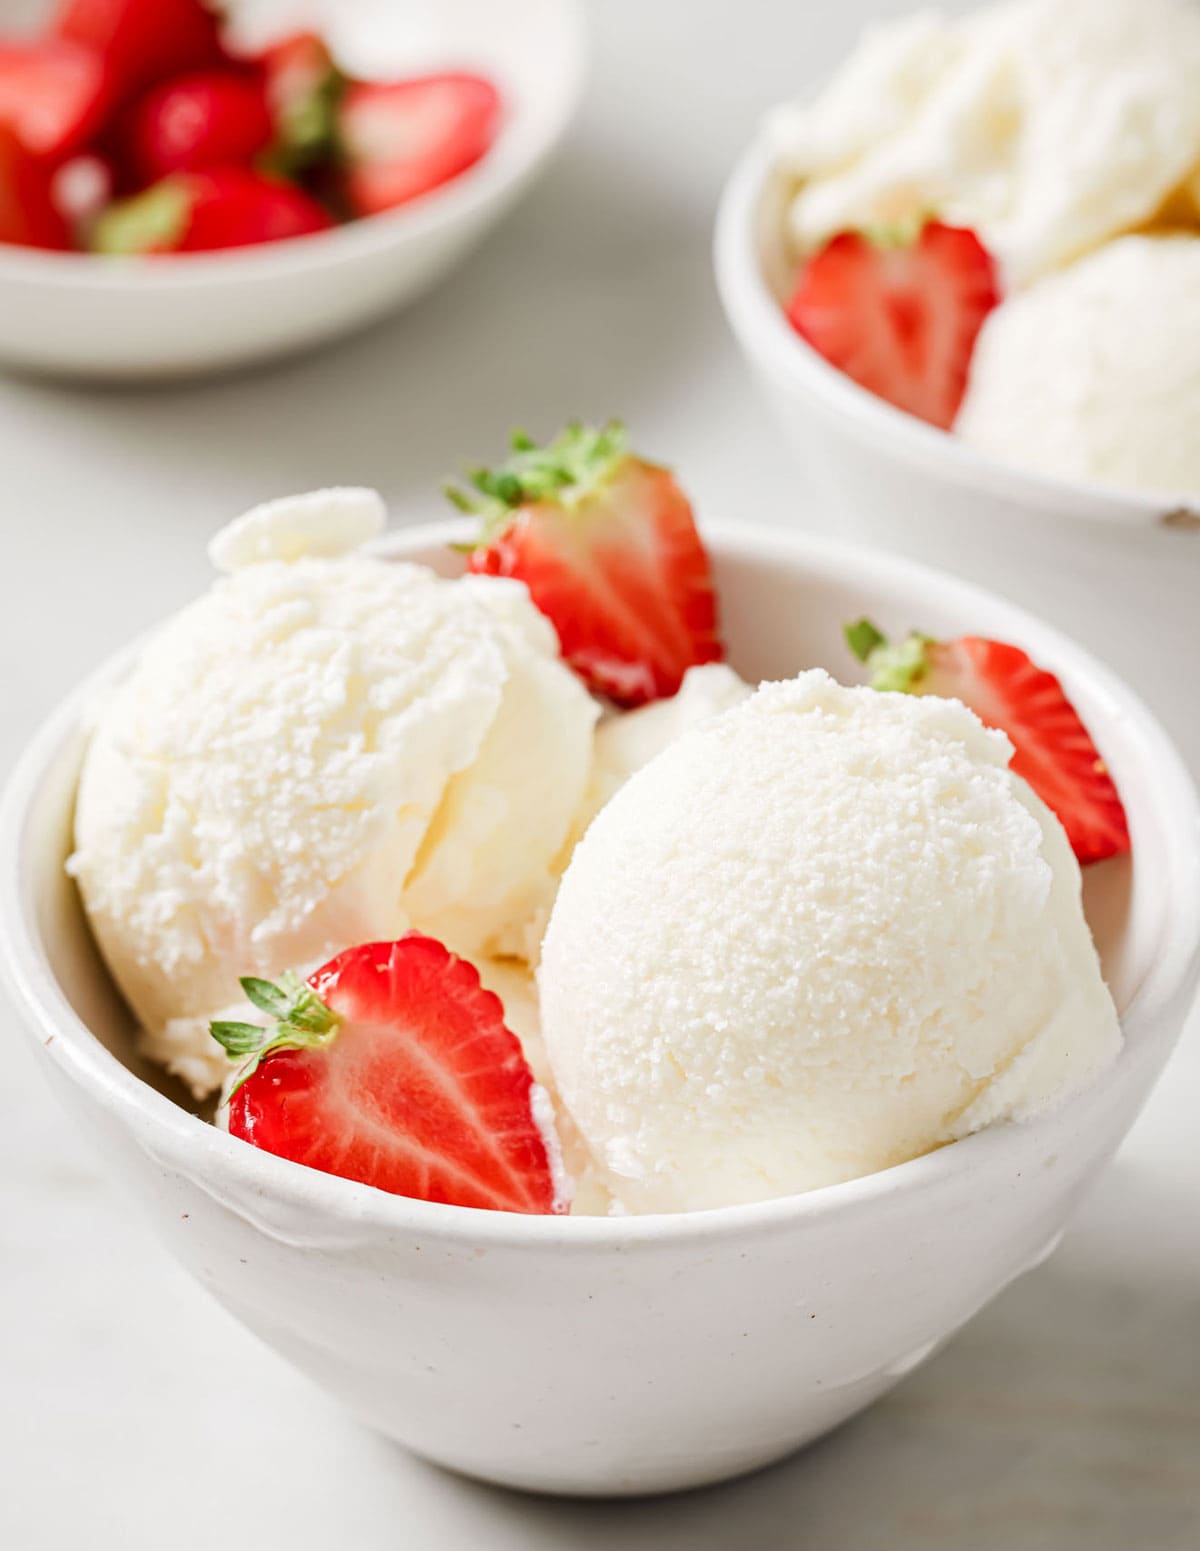 Sugar-free frozen yogurt in a bowl with strawberries.